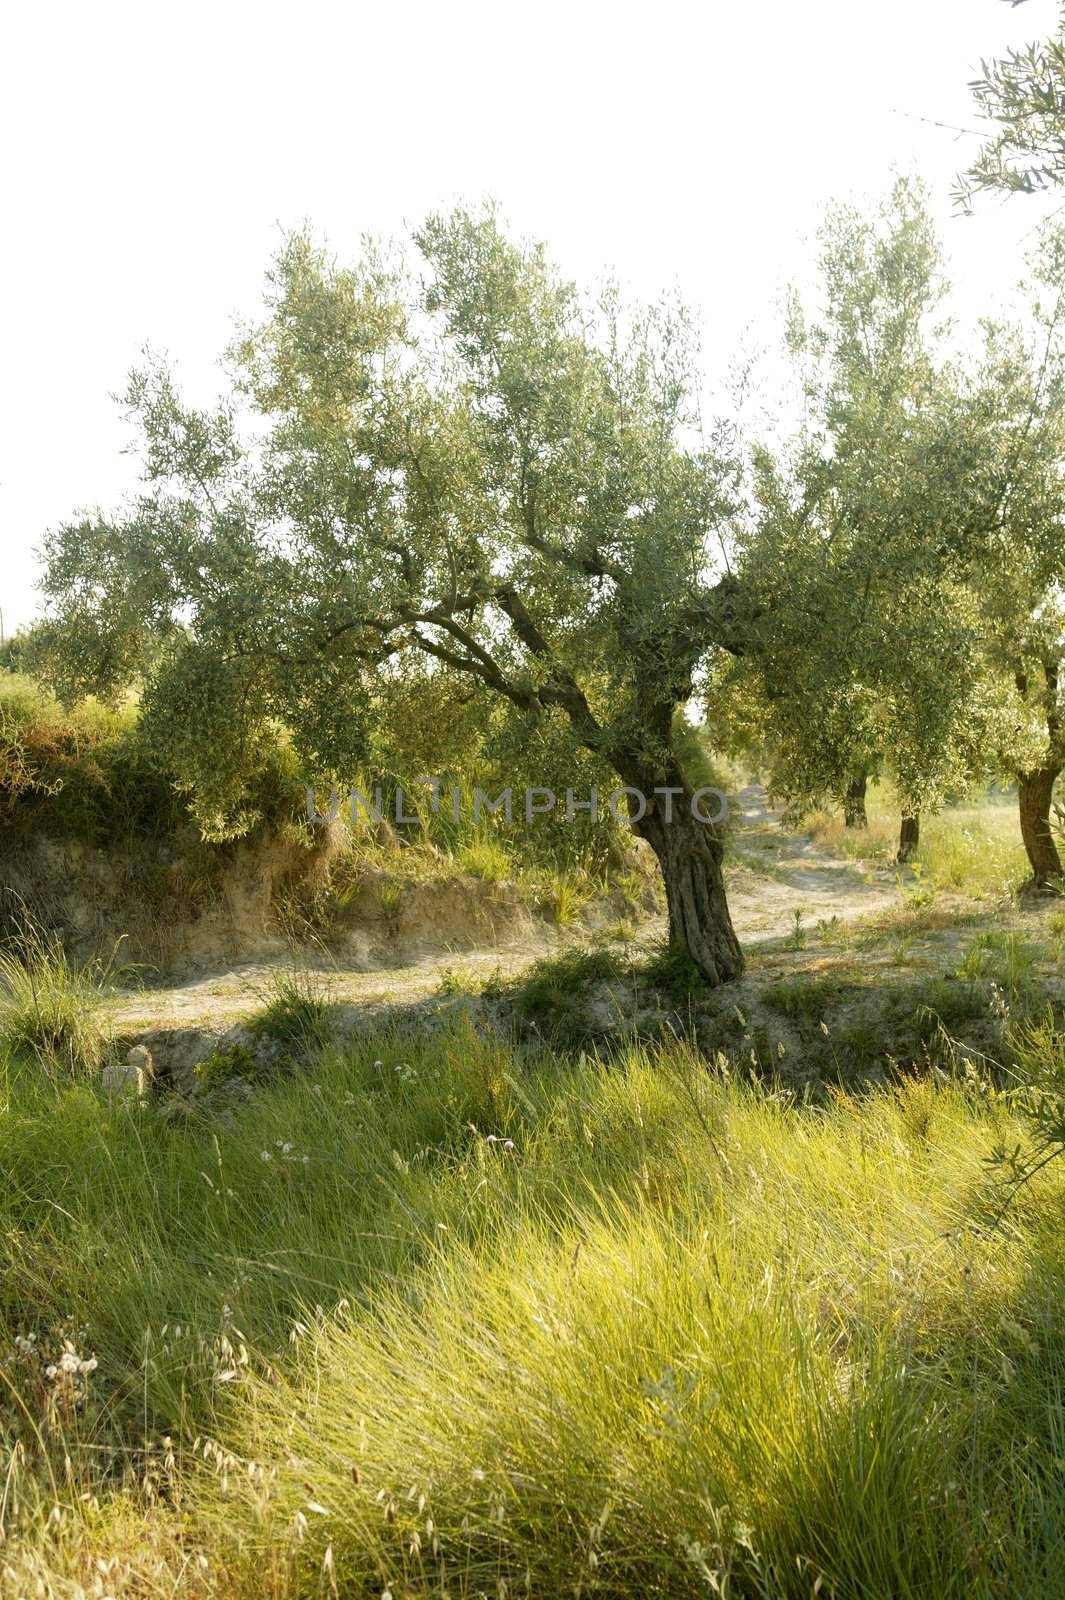 Olive tree field in Spain by lunamarina